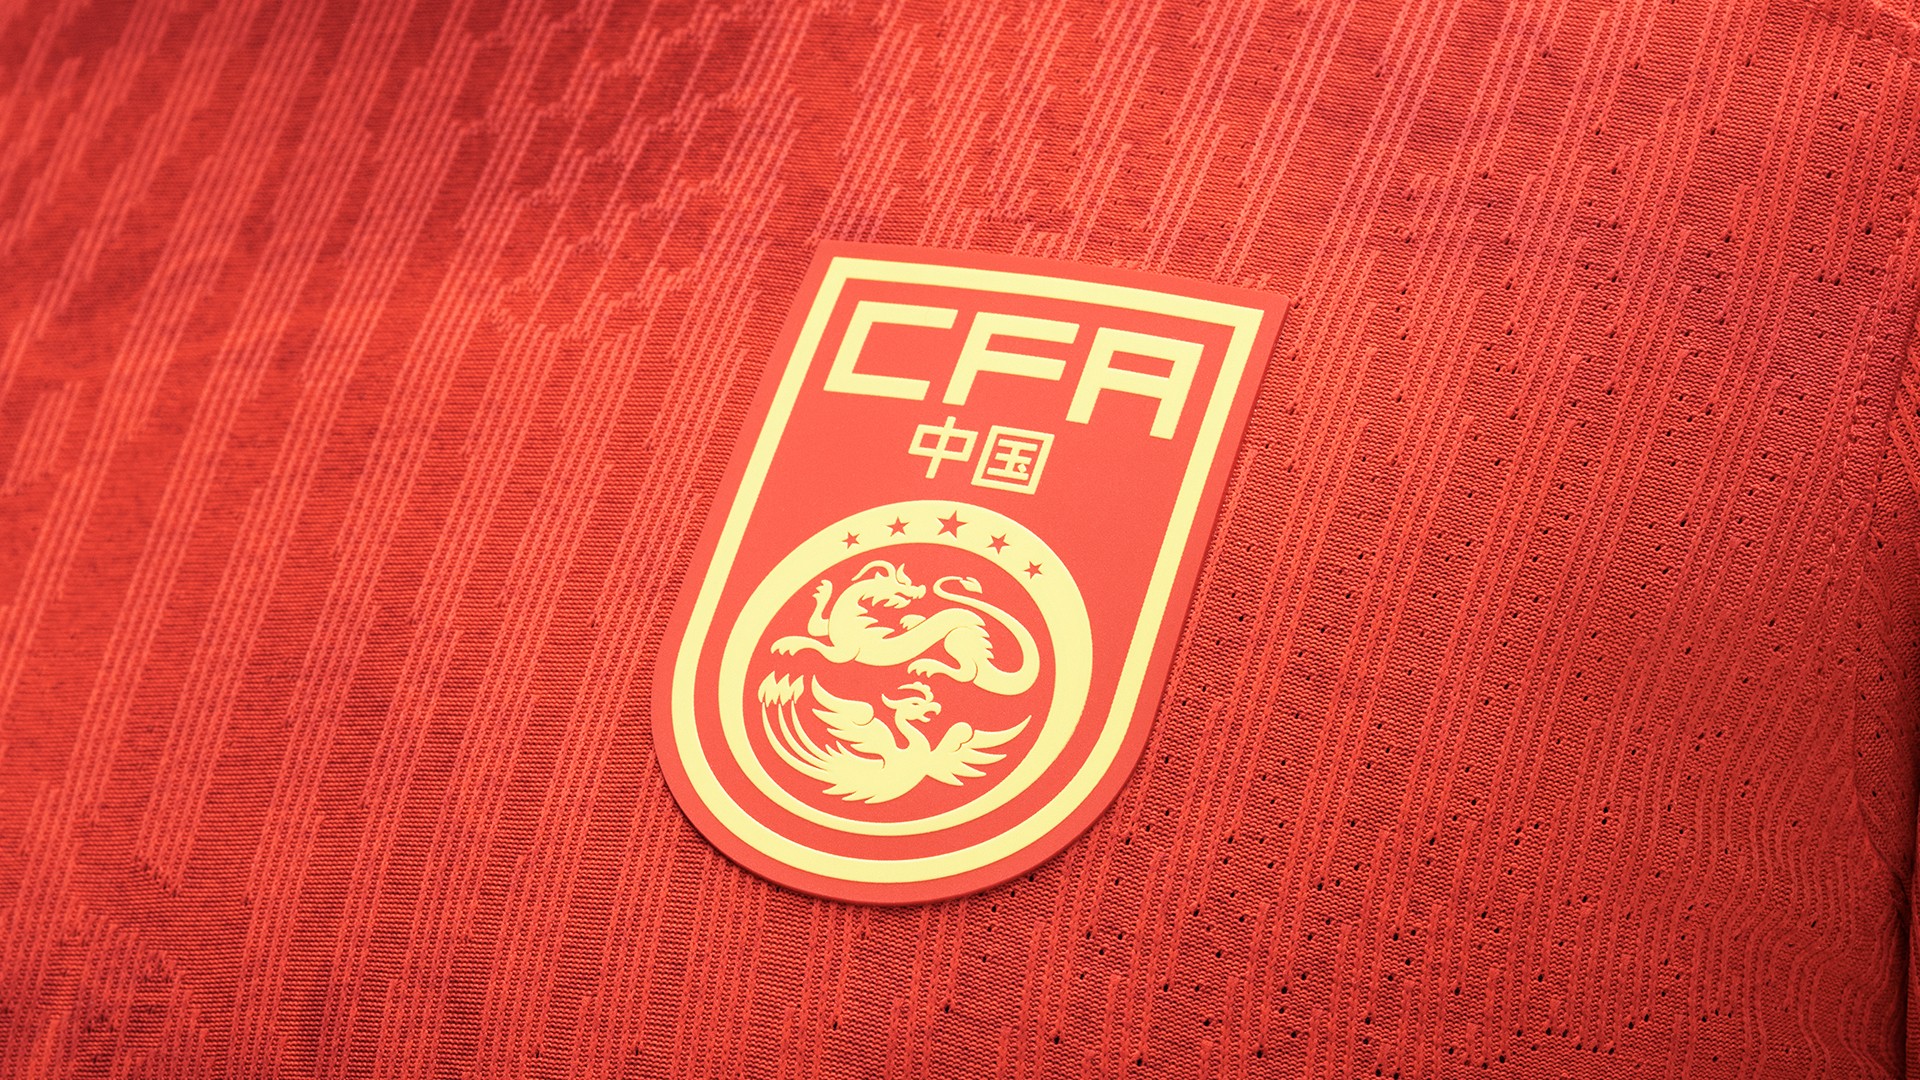 002_china-federation-crest.jpg